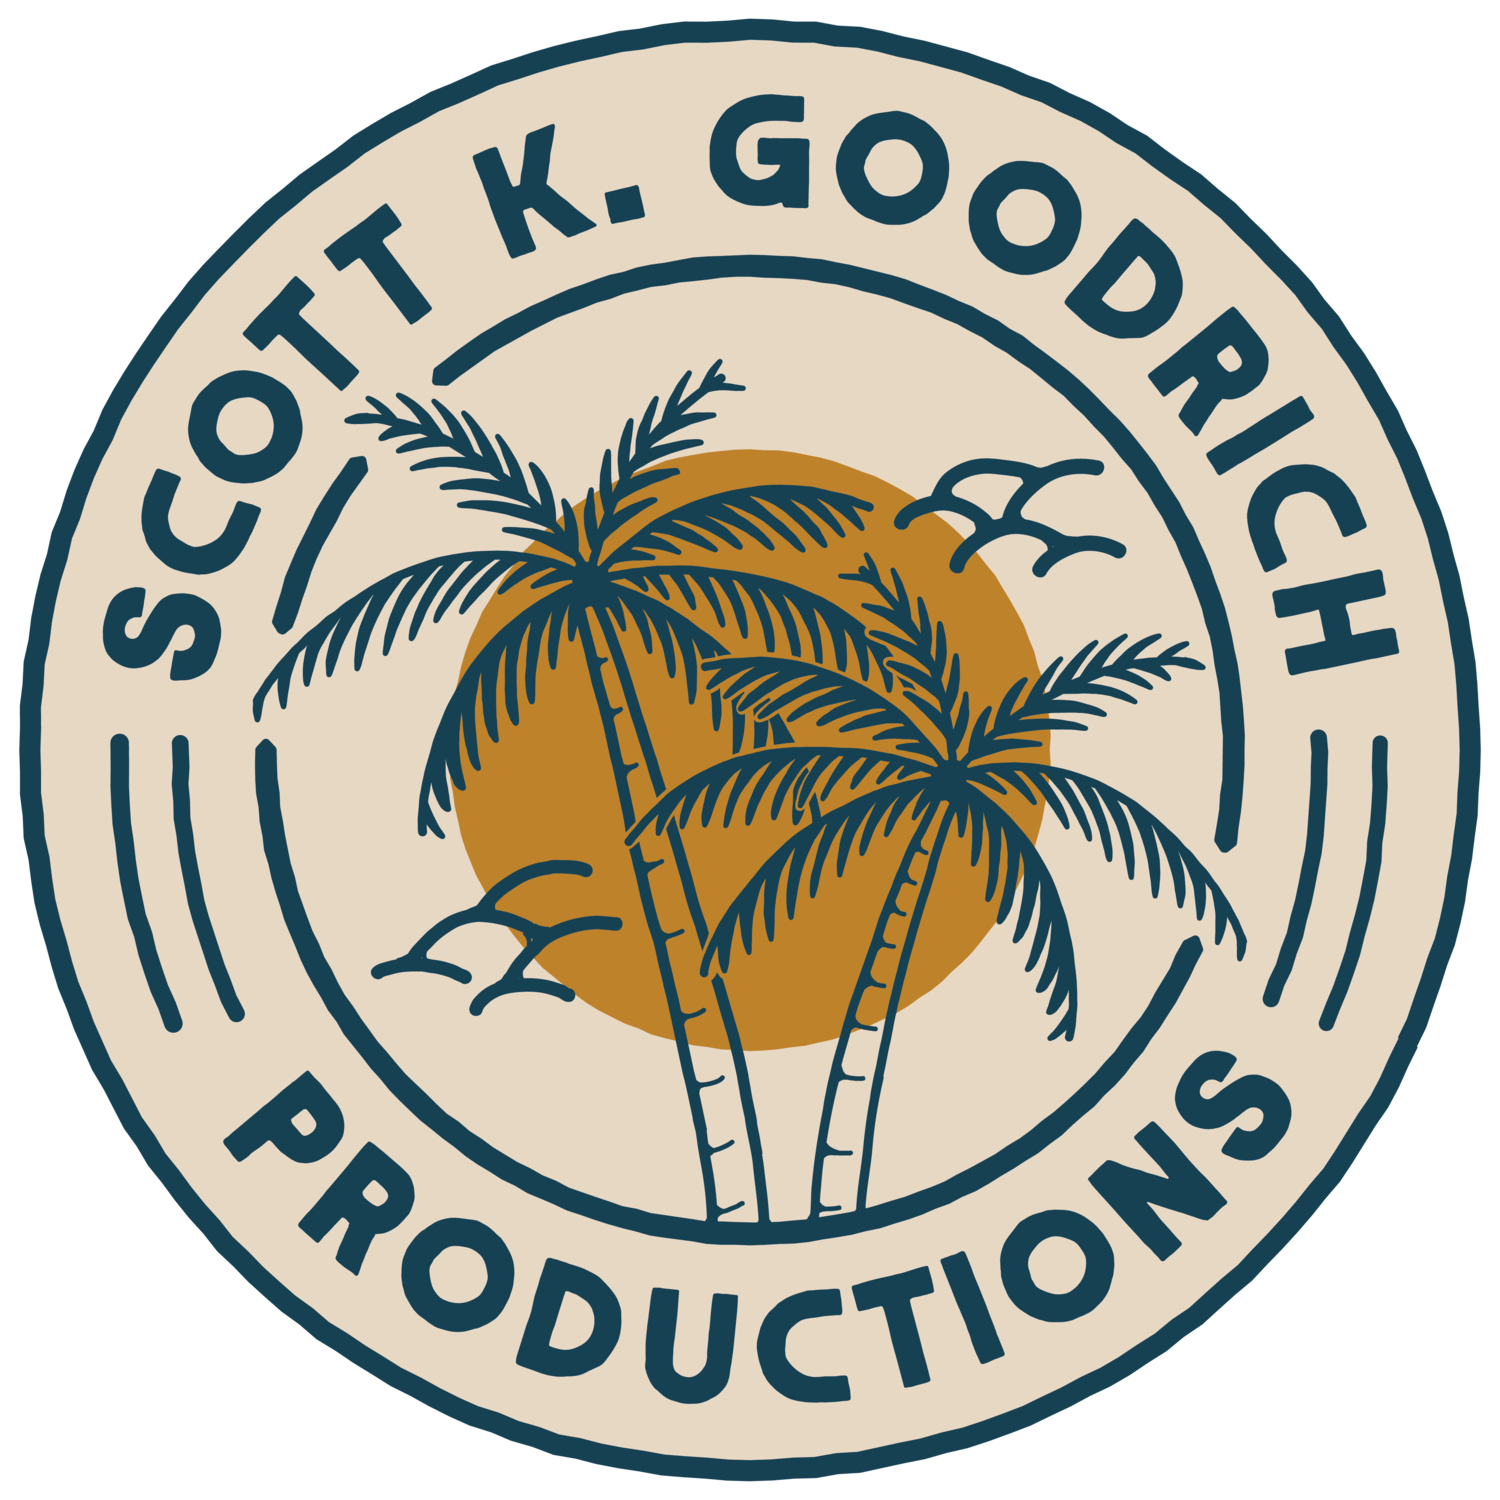 Scott K. Goodrich